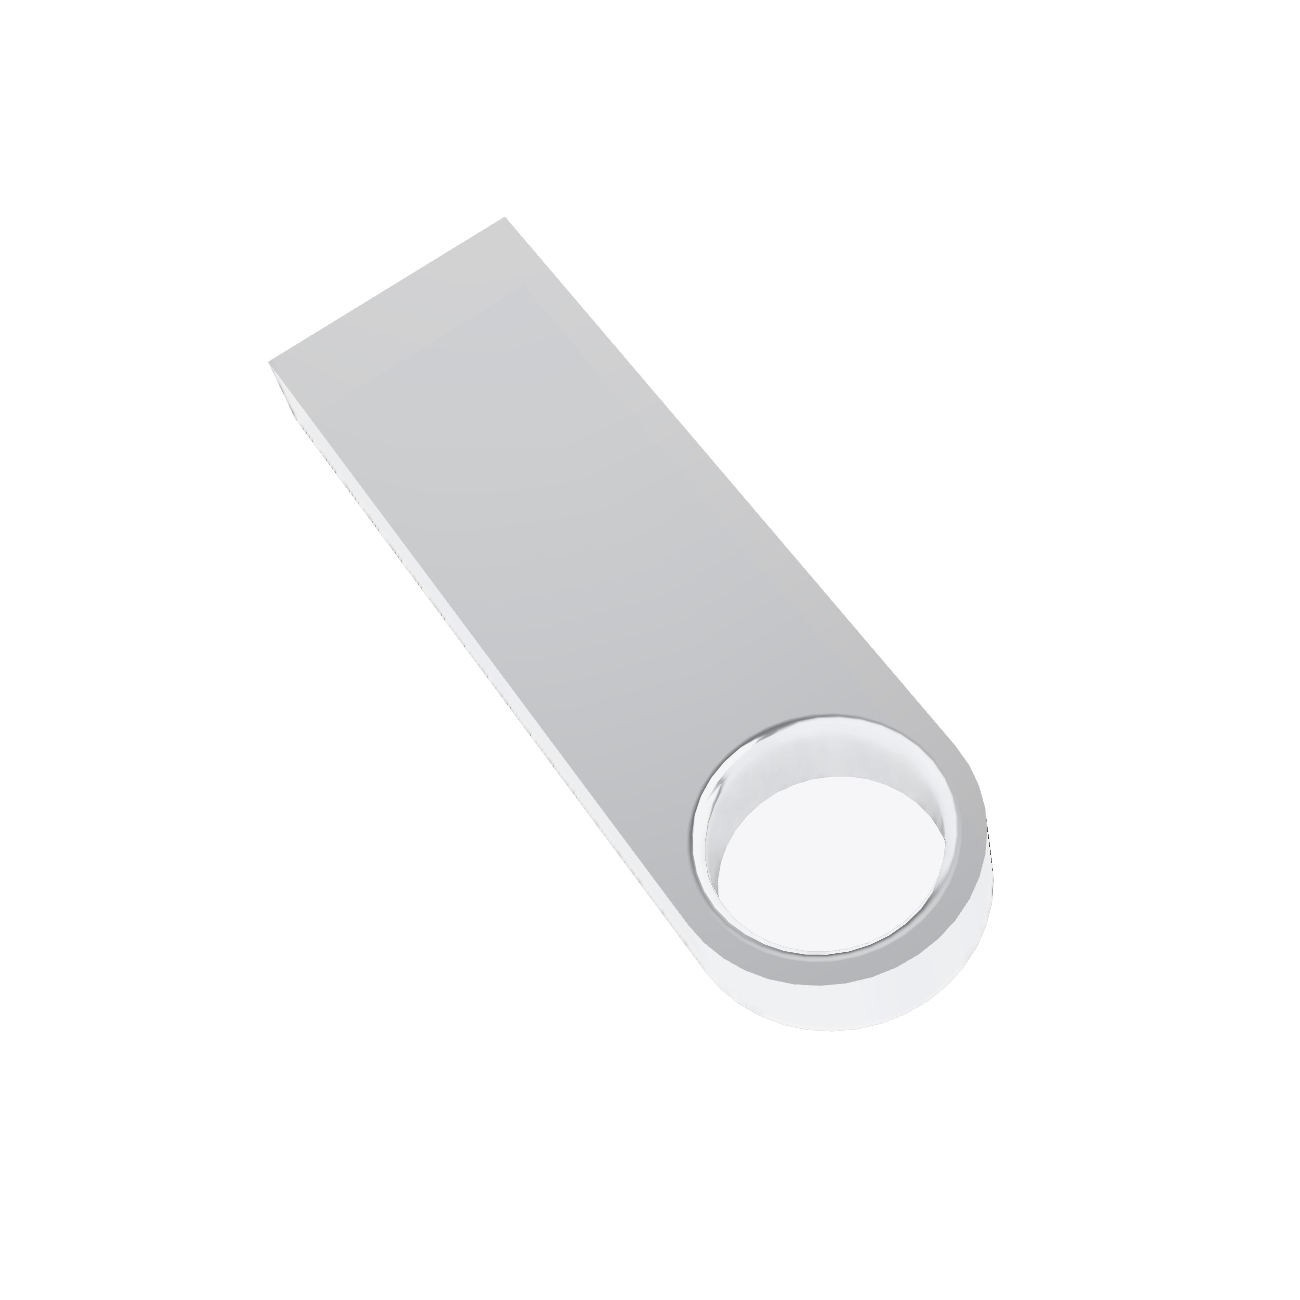 USB GERMANY ® SE09 GB) 64 USB-Stick (Silber